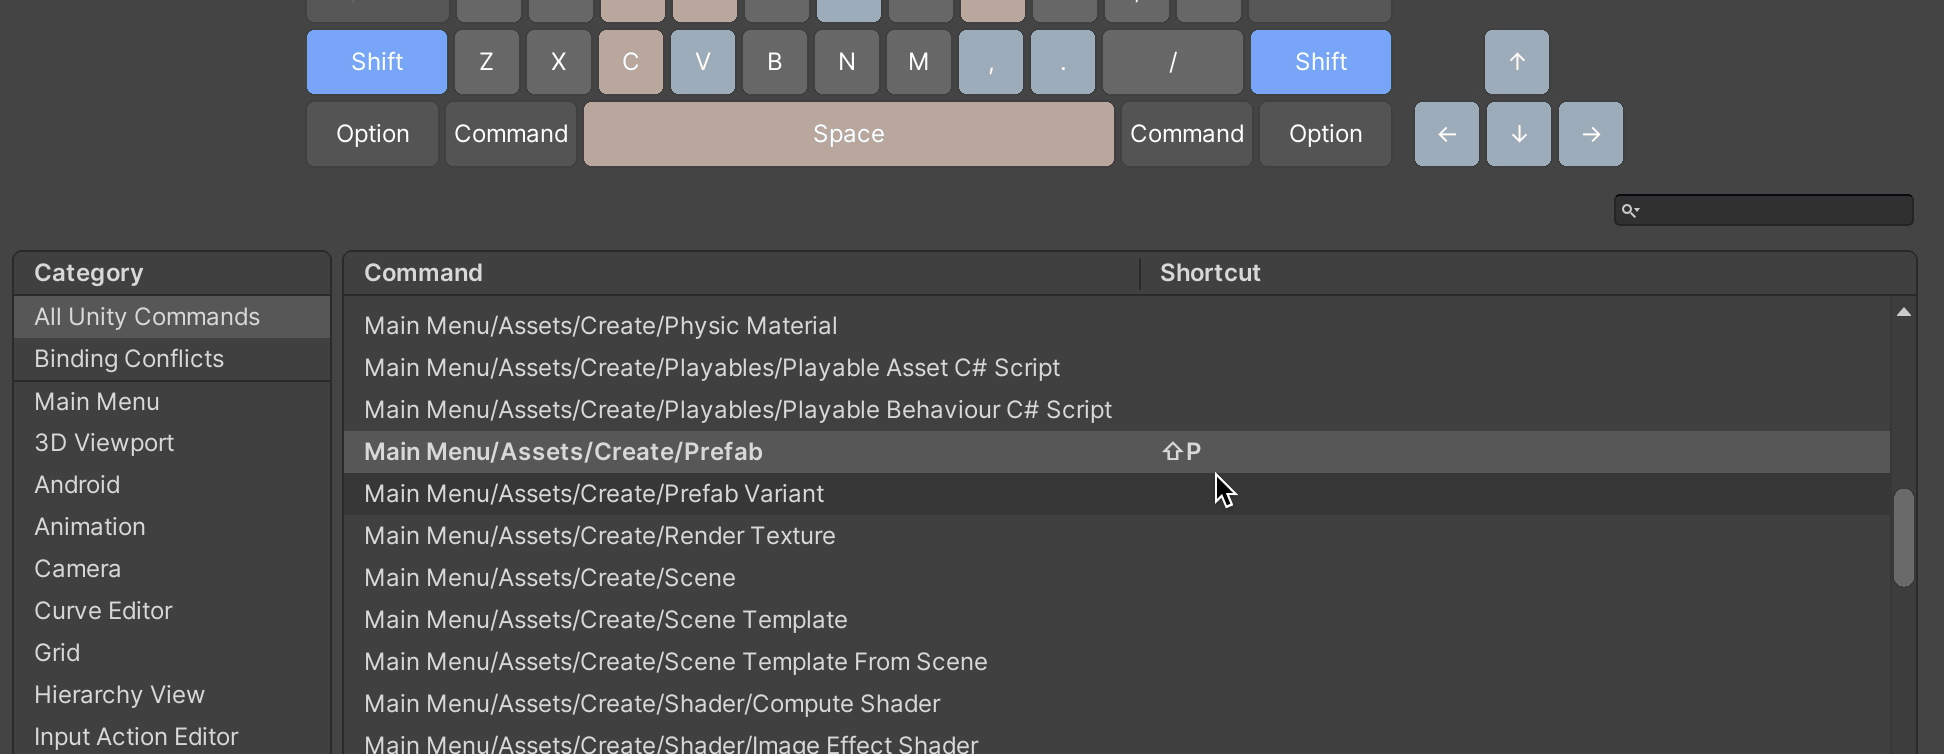 Right-click context menu in Unity Shortcut Manager